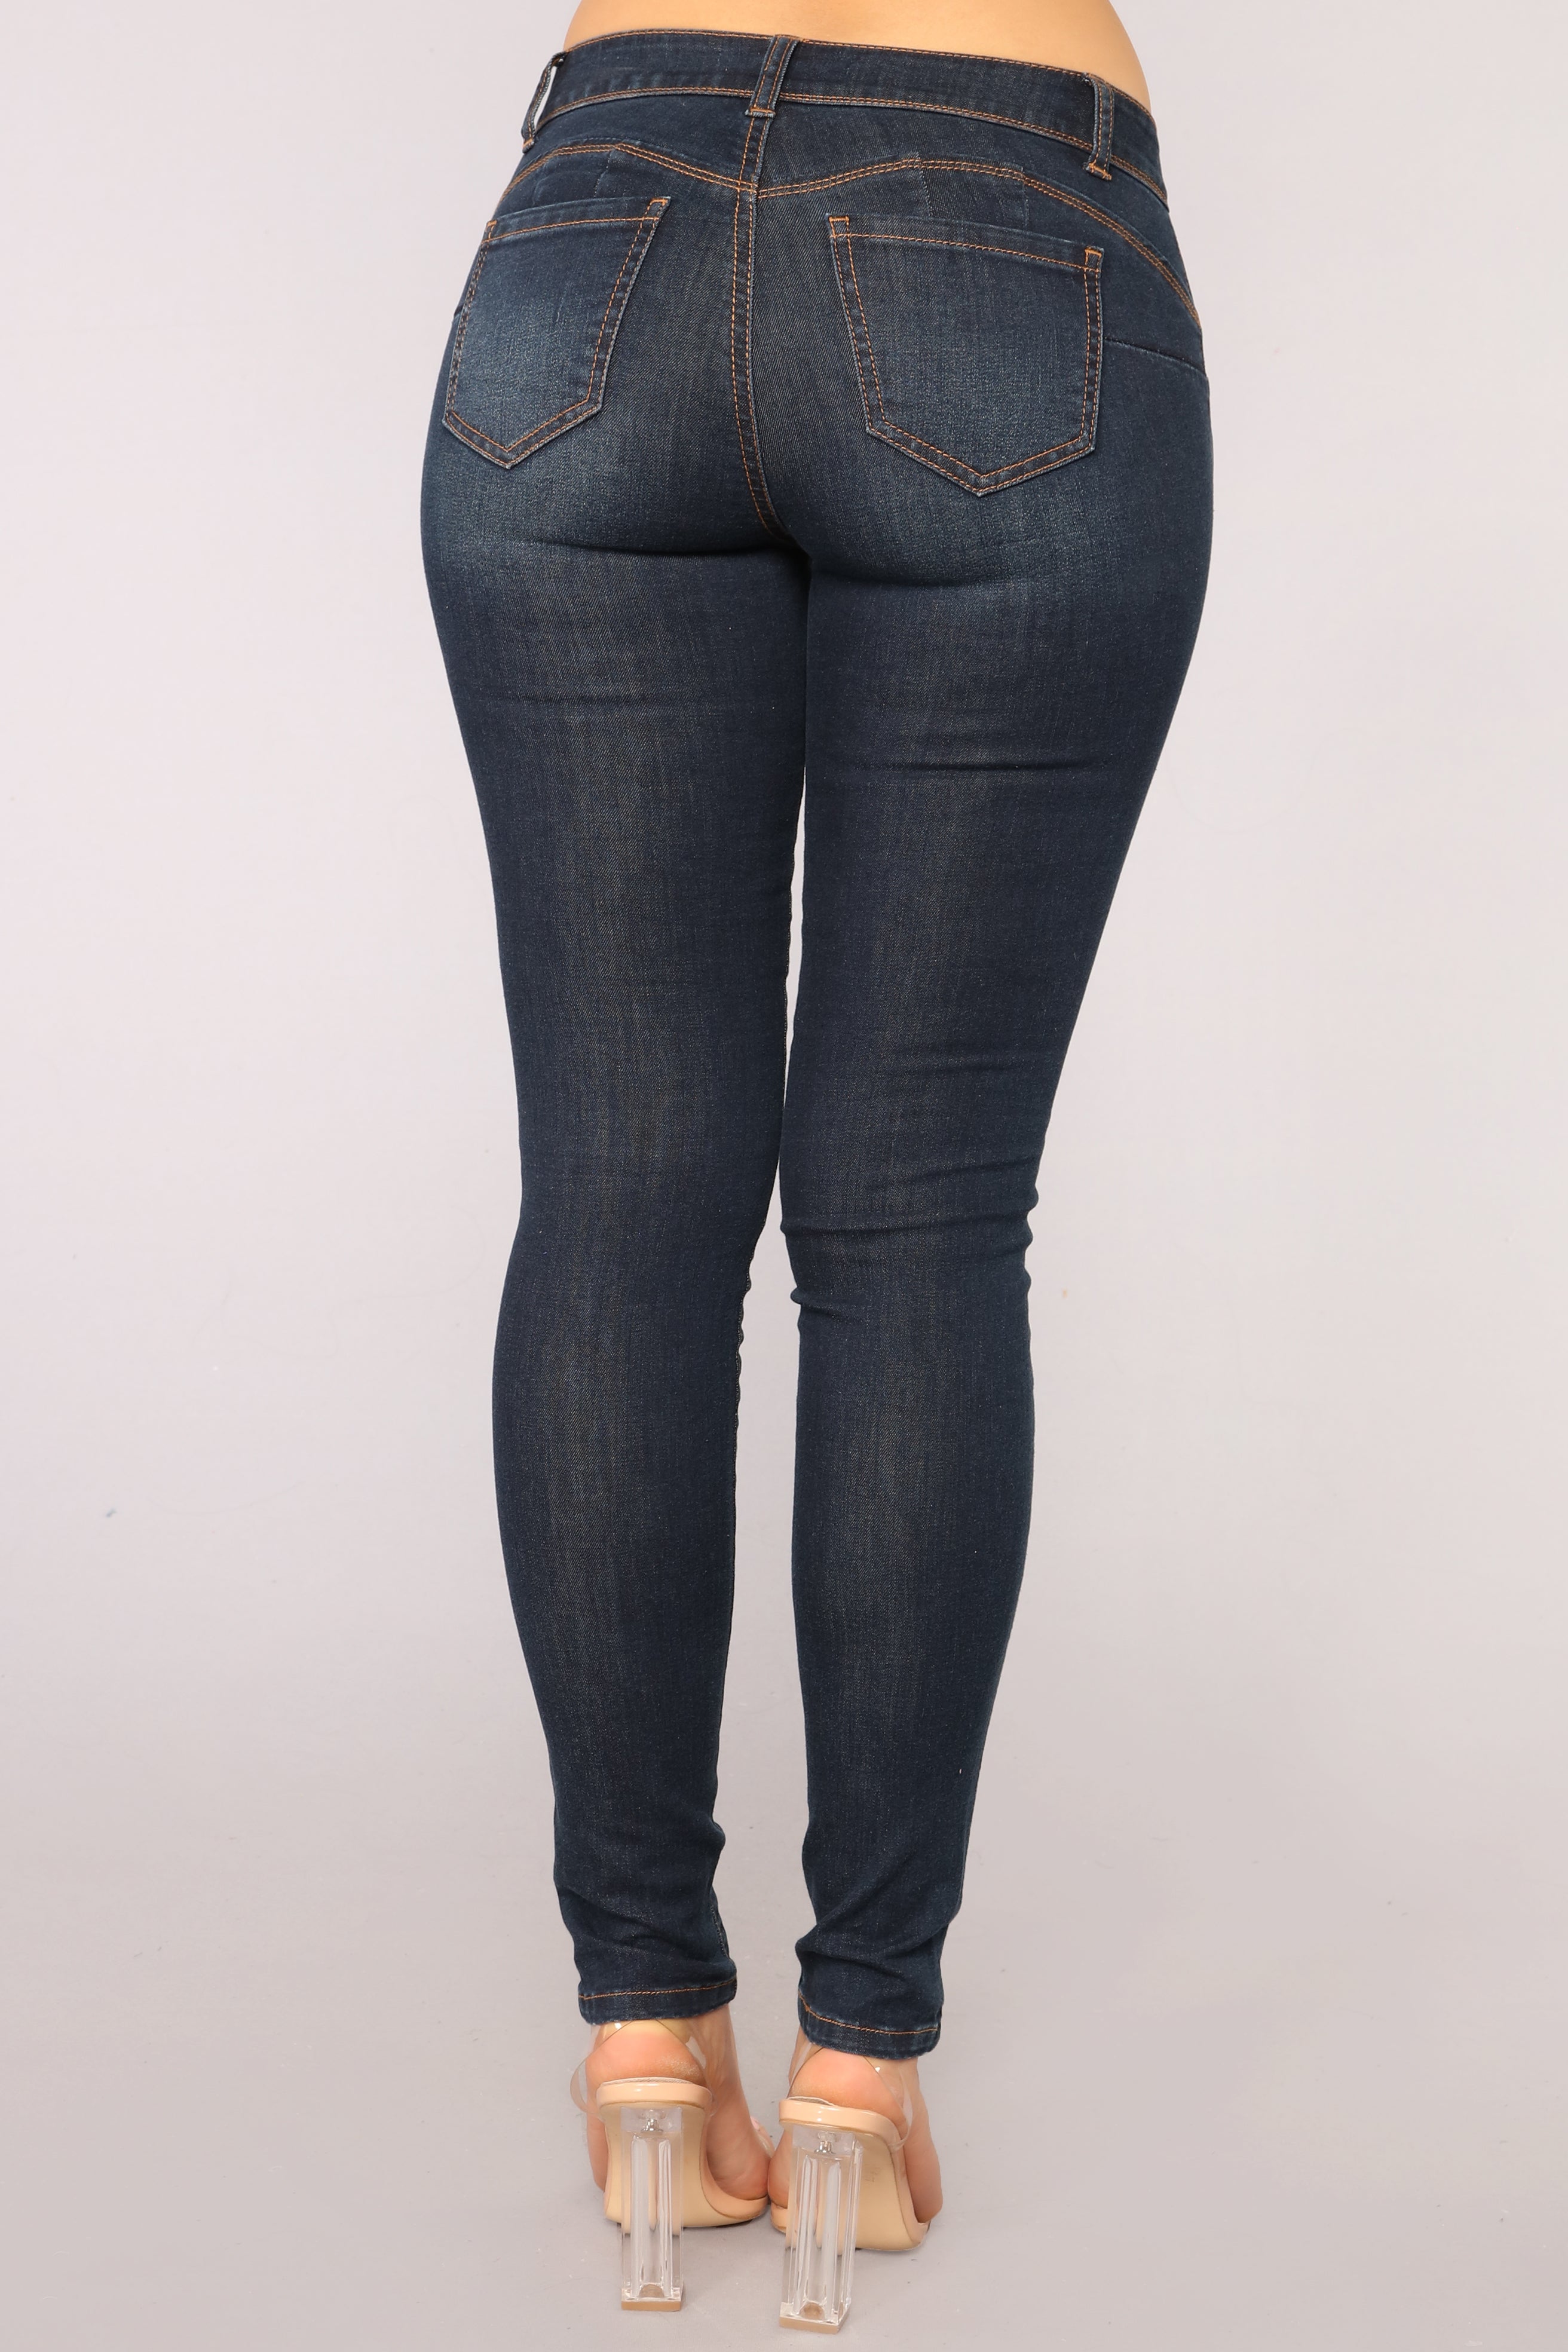 Make It Bounce Booty Shaping Jeans - Dark Denim – Fashion Nova